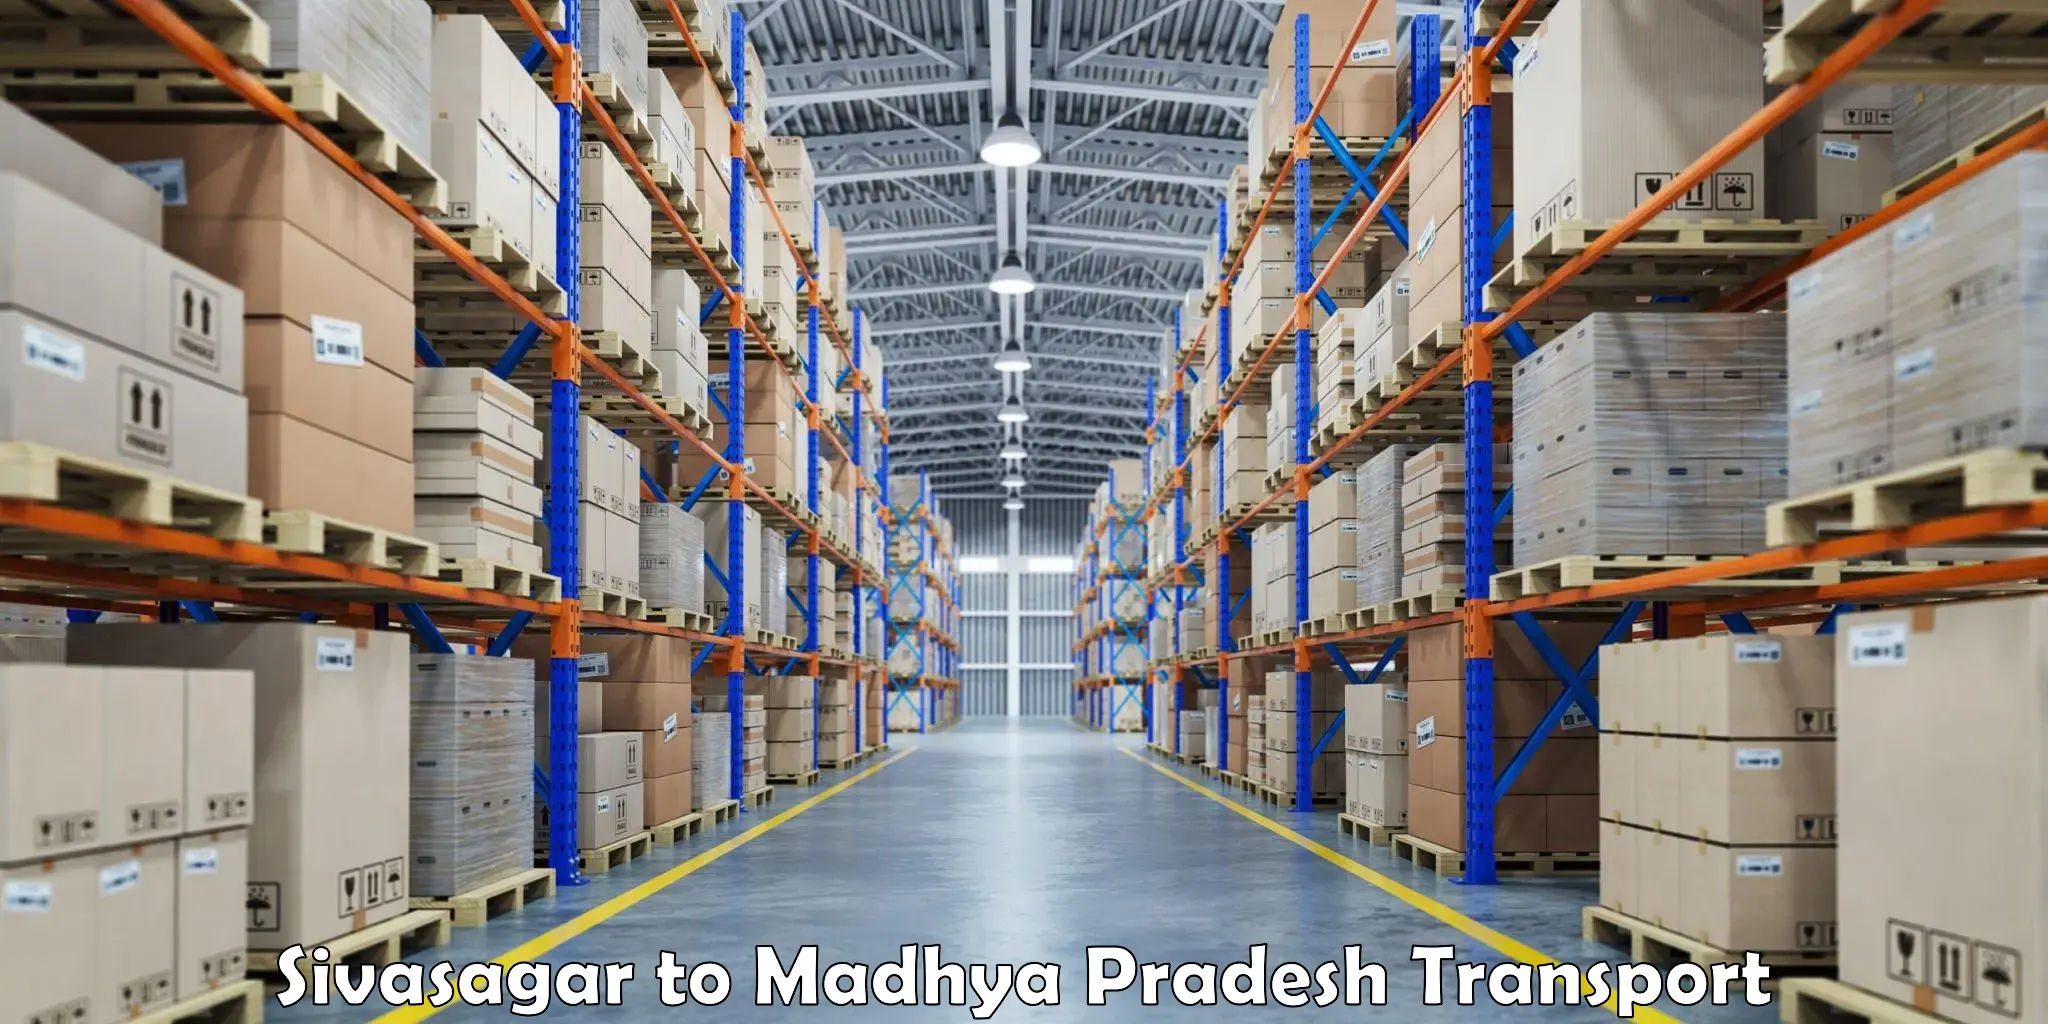 Truck transport companies in India Sivasagar to Waraseoni